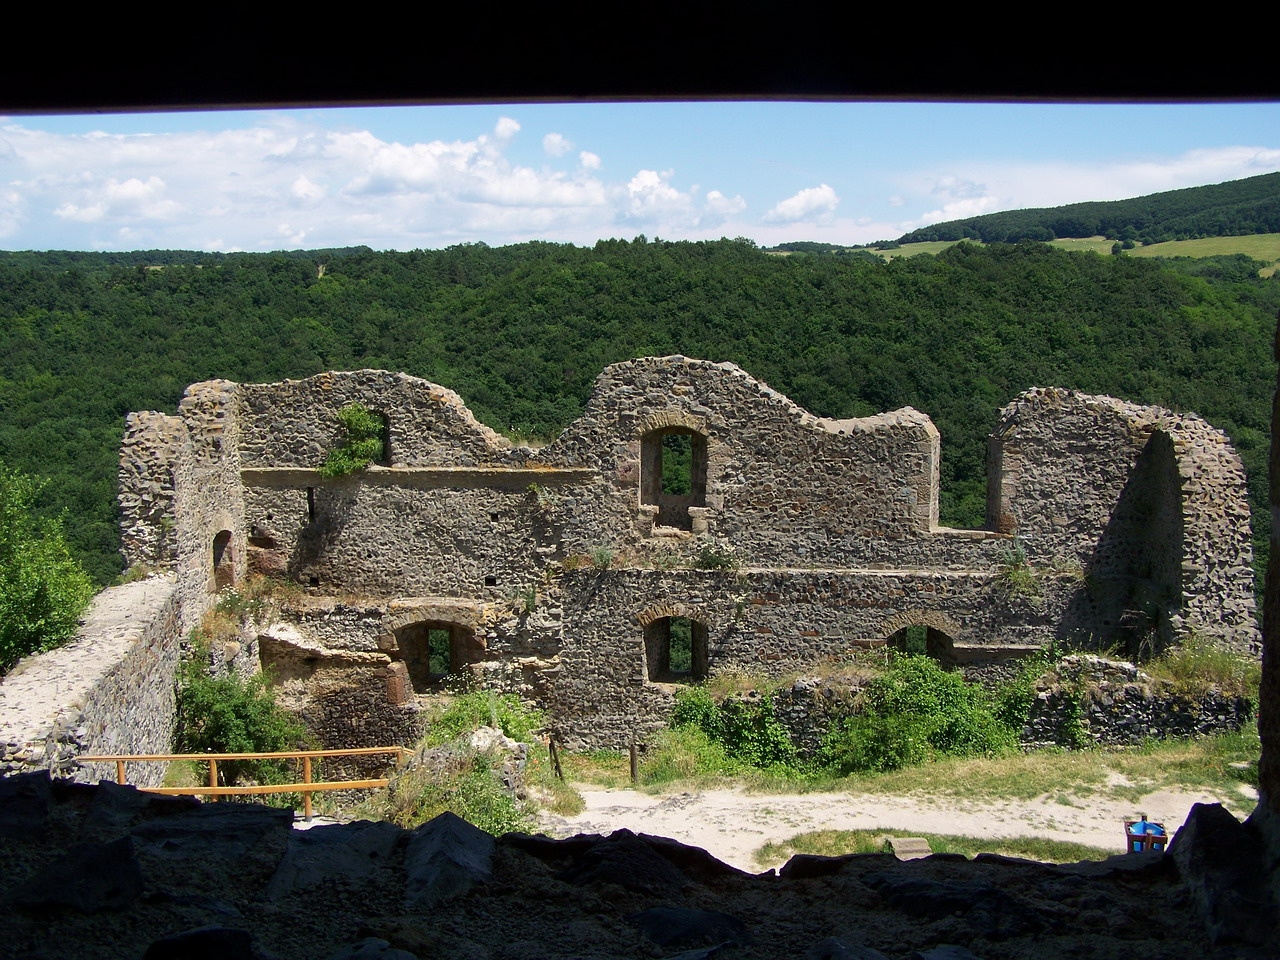 Somoskői vár, a nyugati várfal maradványa belűlről